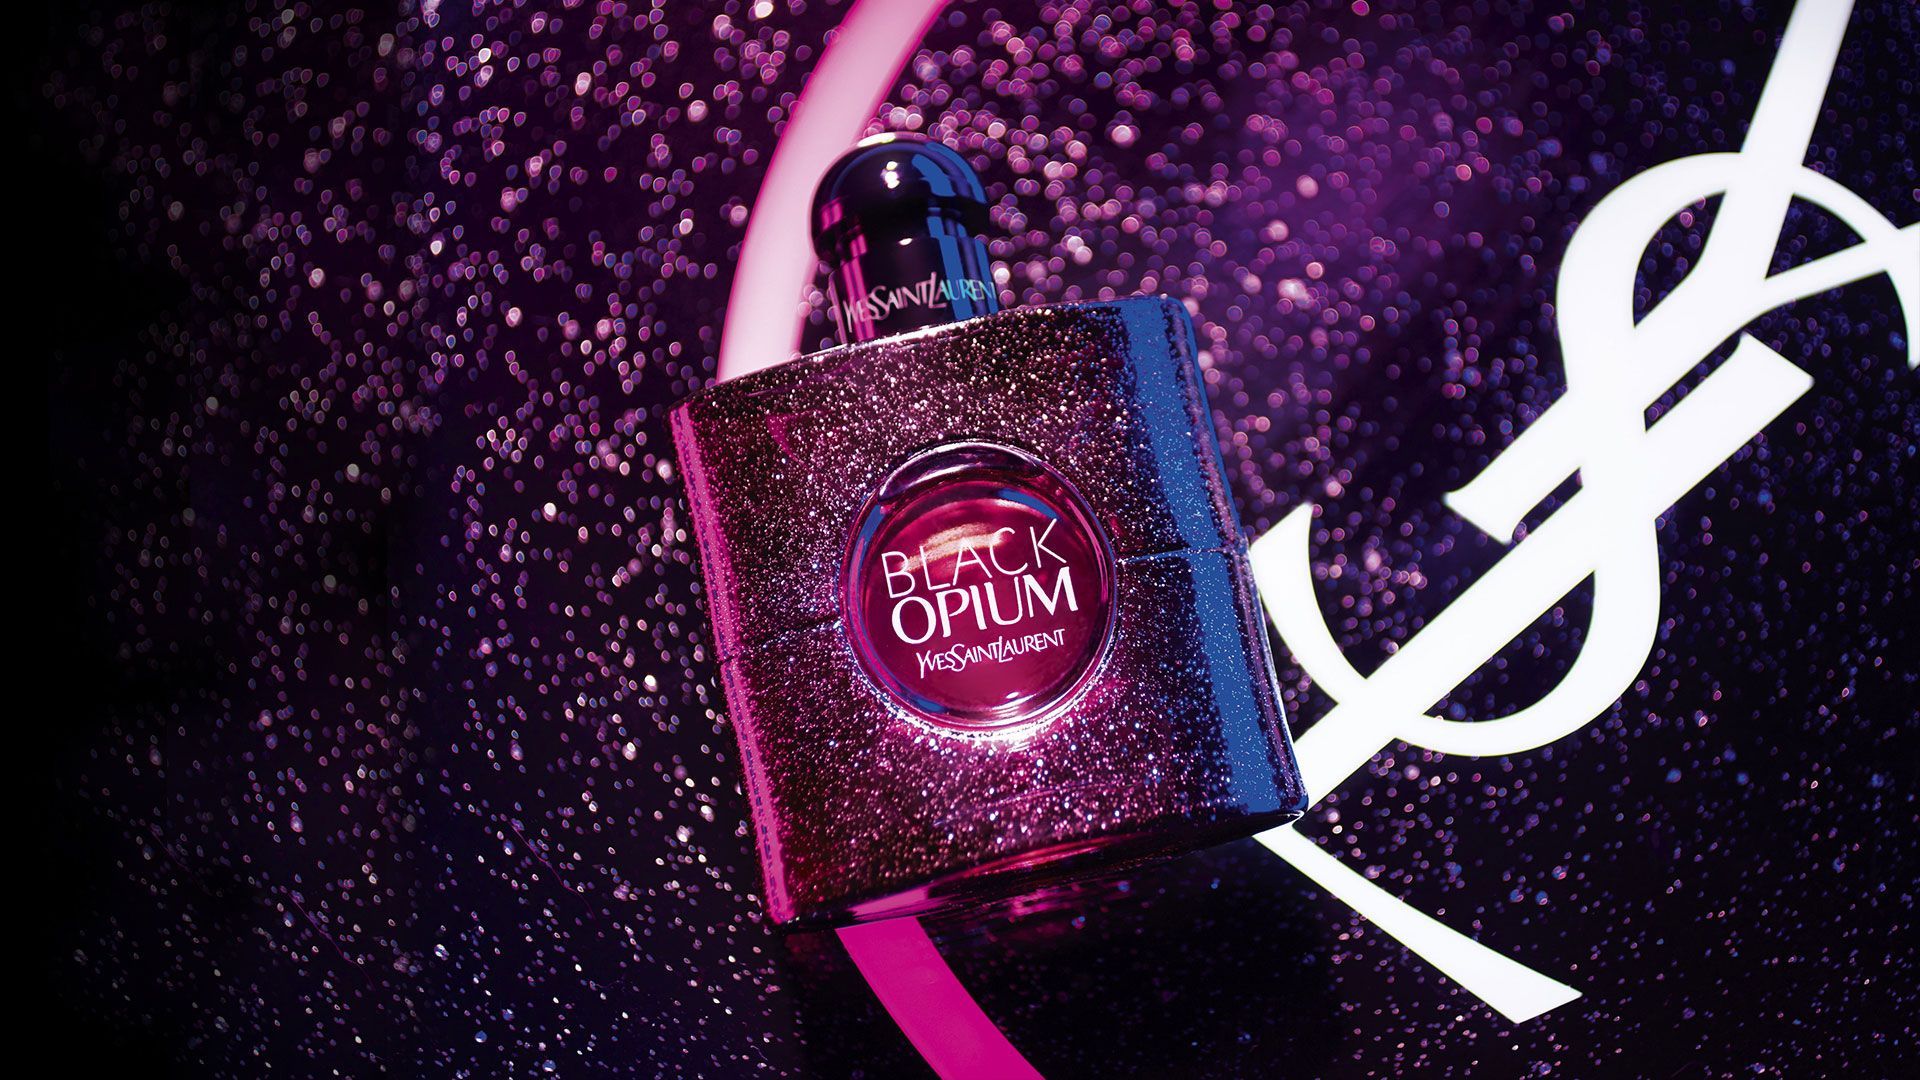 Black Opium Le Parfum Travel Spray - Yves Saint Laurent